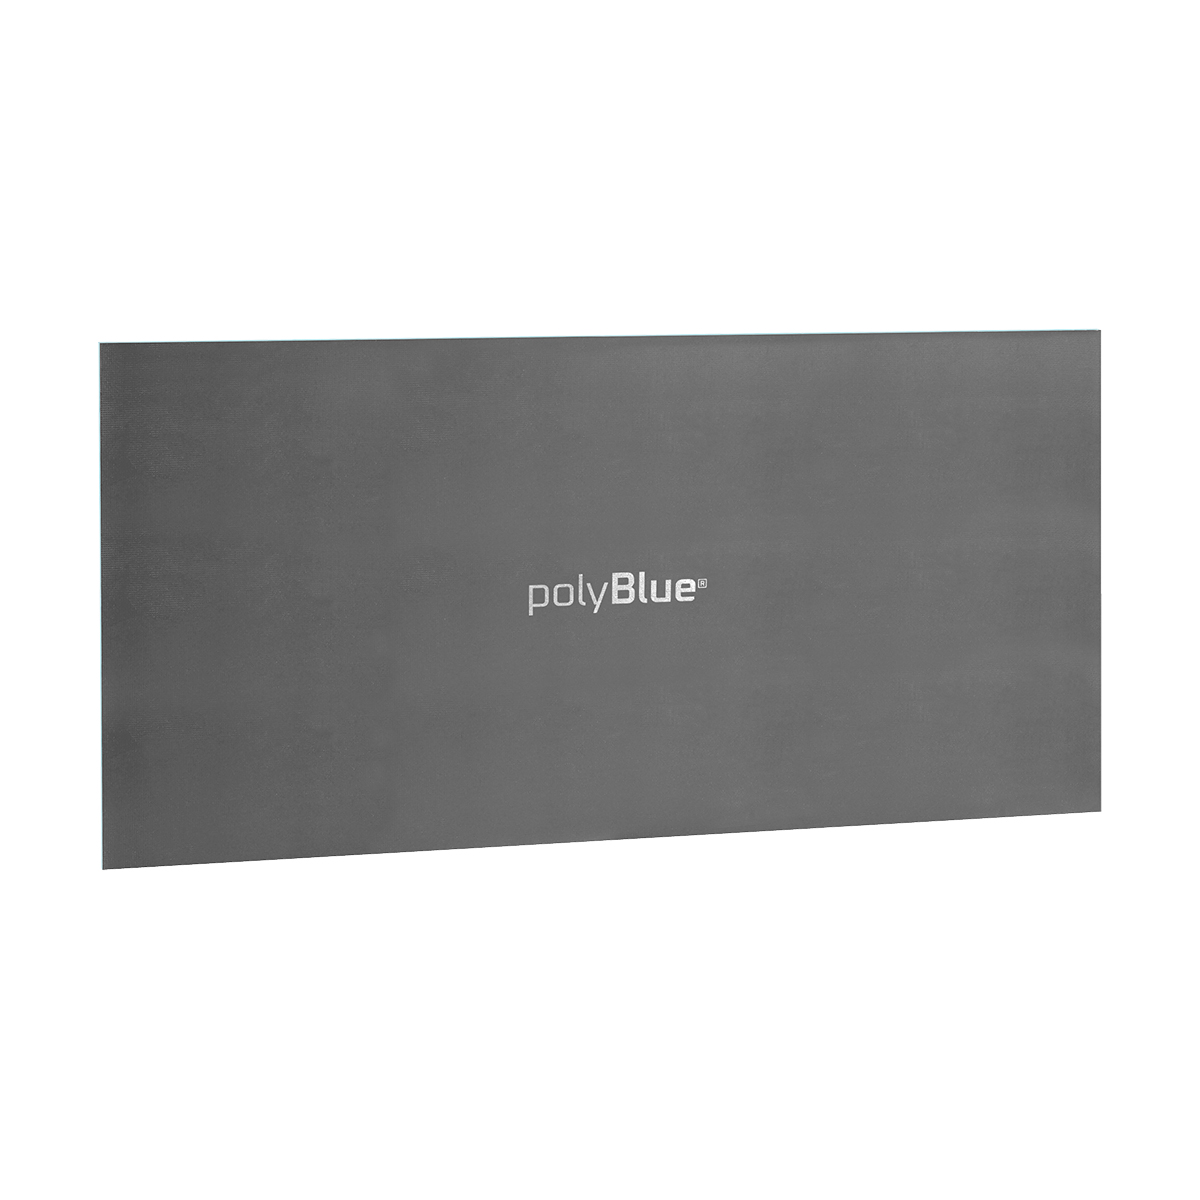 PolyBlue pro plaat XL 10mm